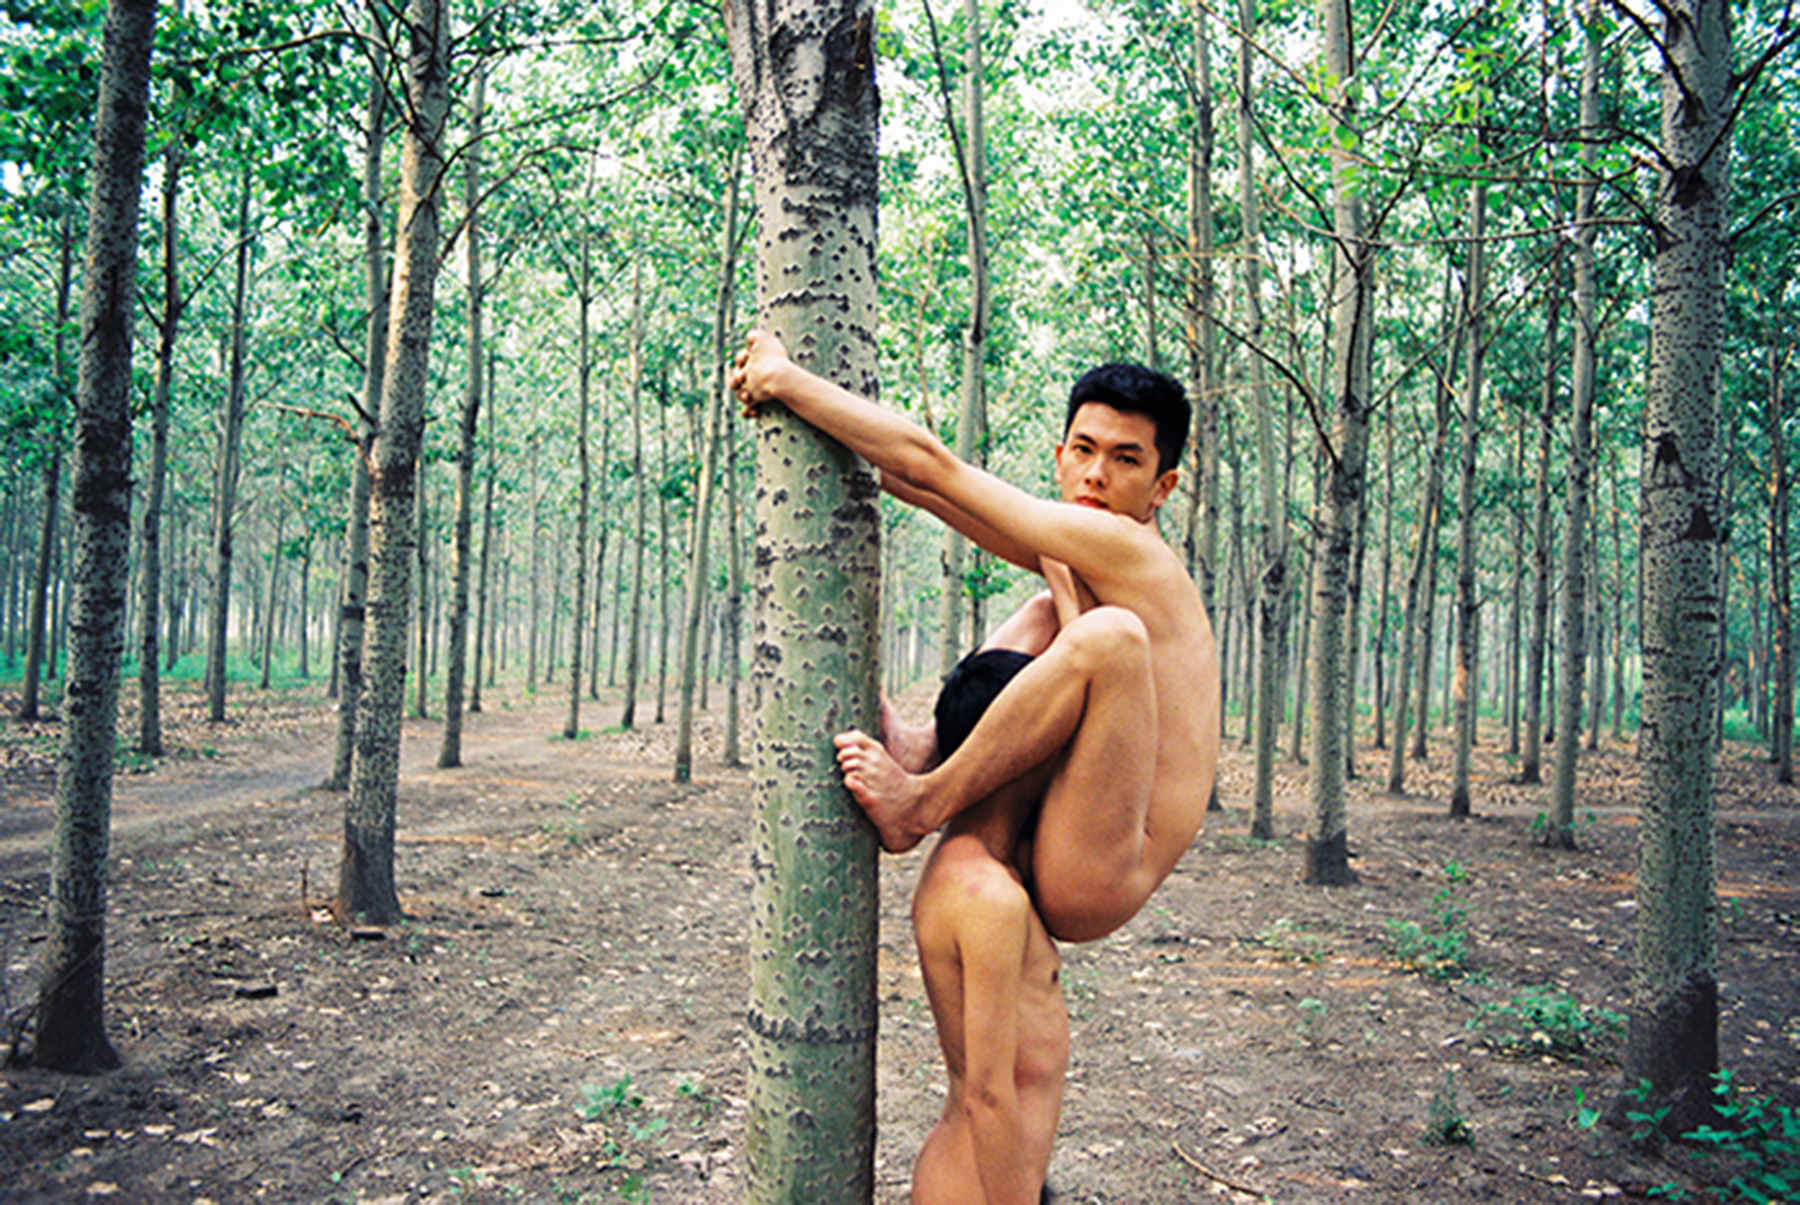 Hung nude male farmers